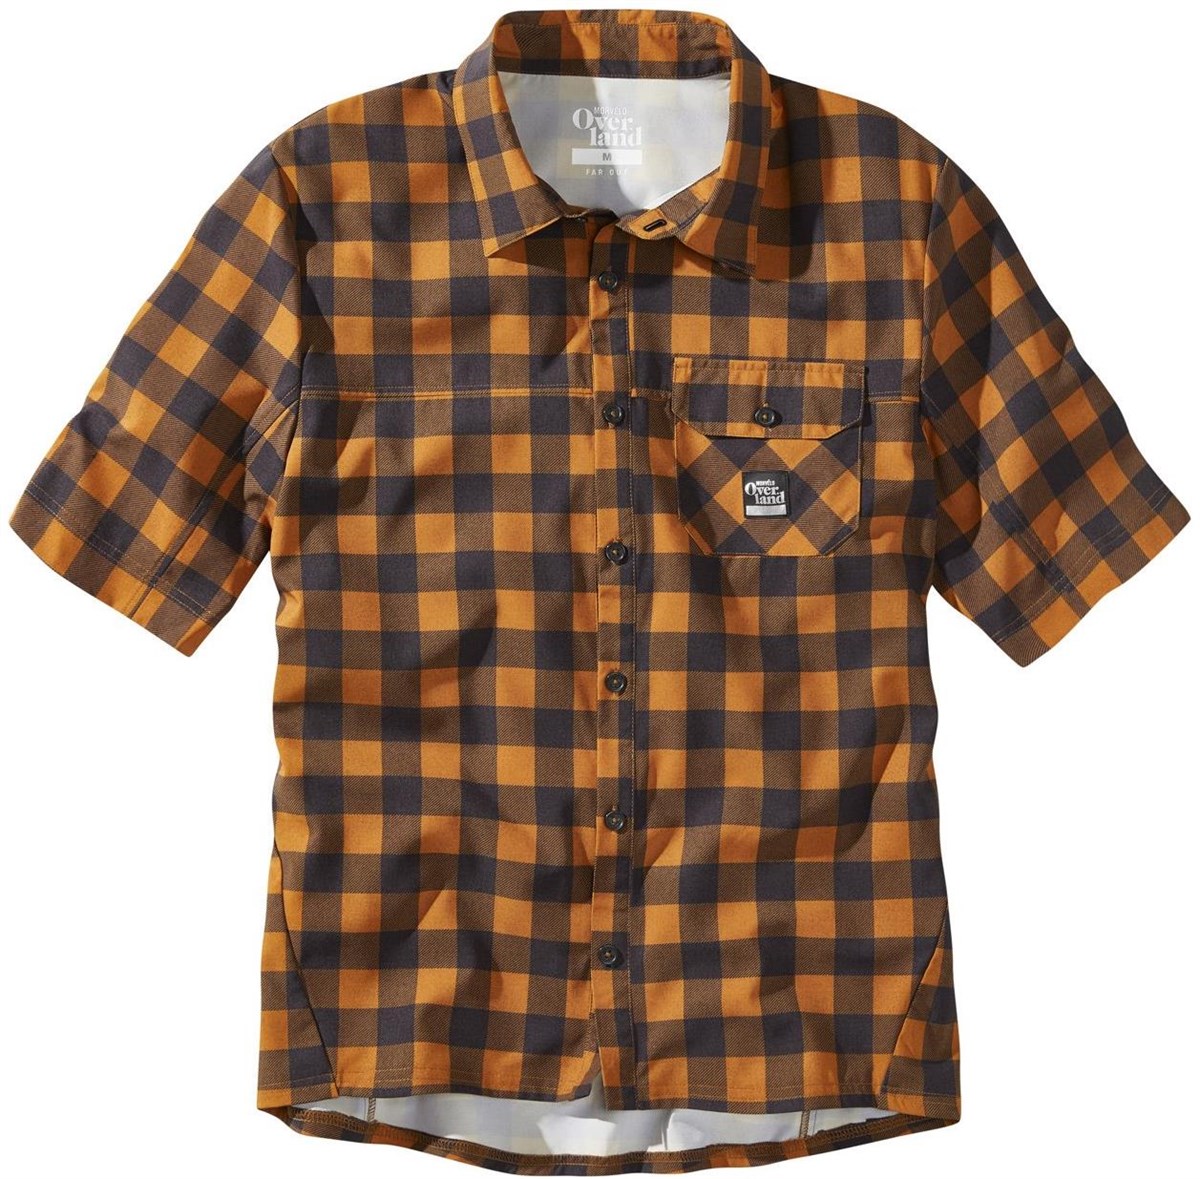 Morvelo Back Country Overland Short Sleeve Shirt product image